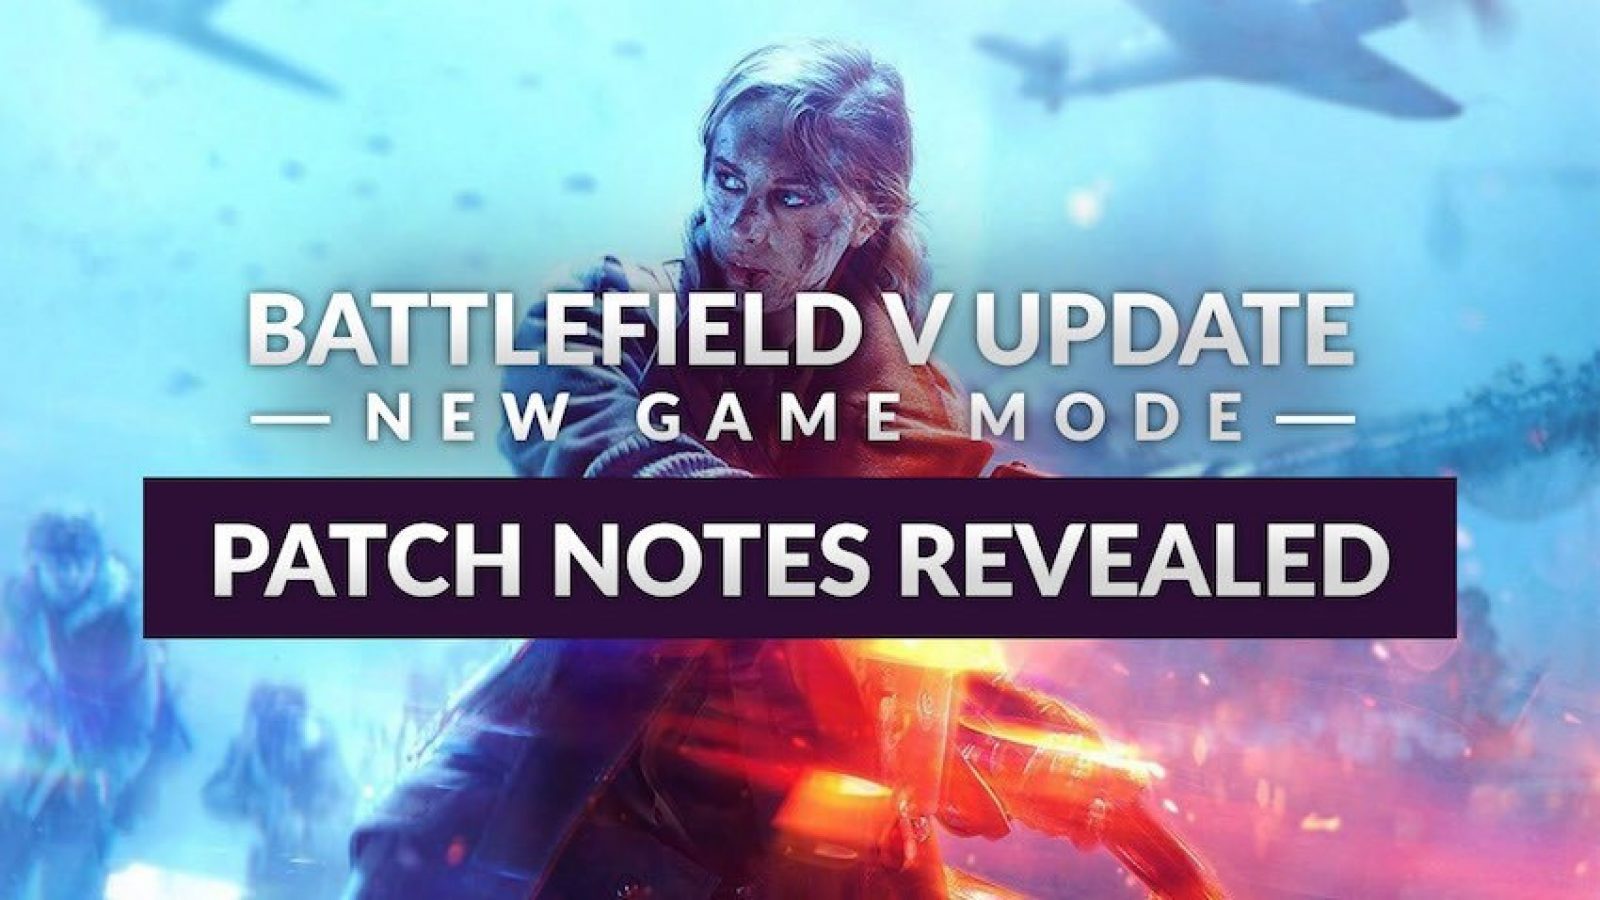 Battlefield V Community Games Now Allows Tides of War Progression